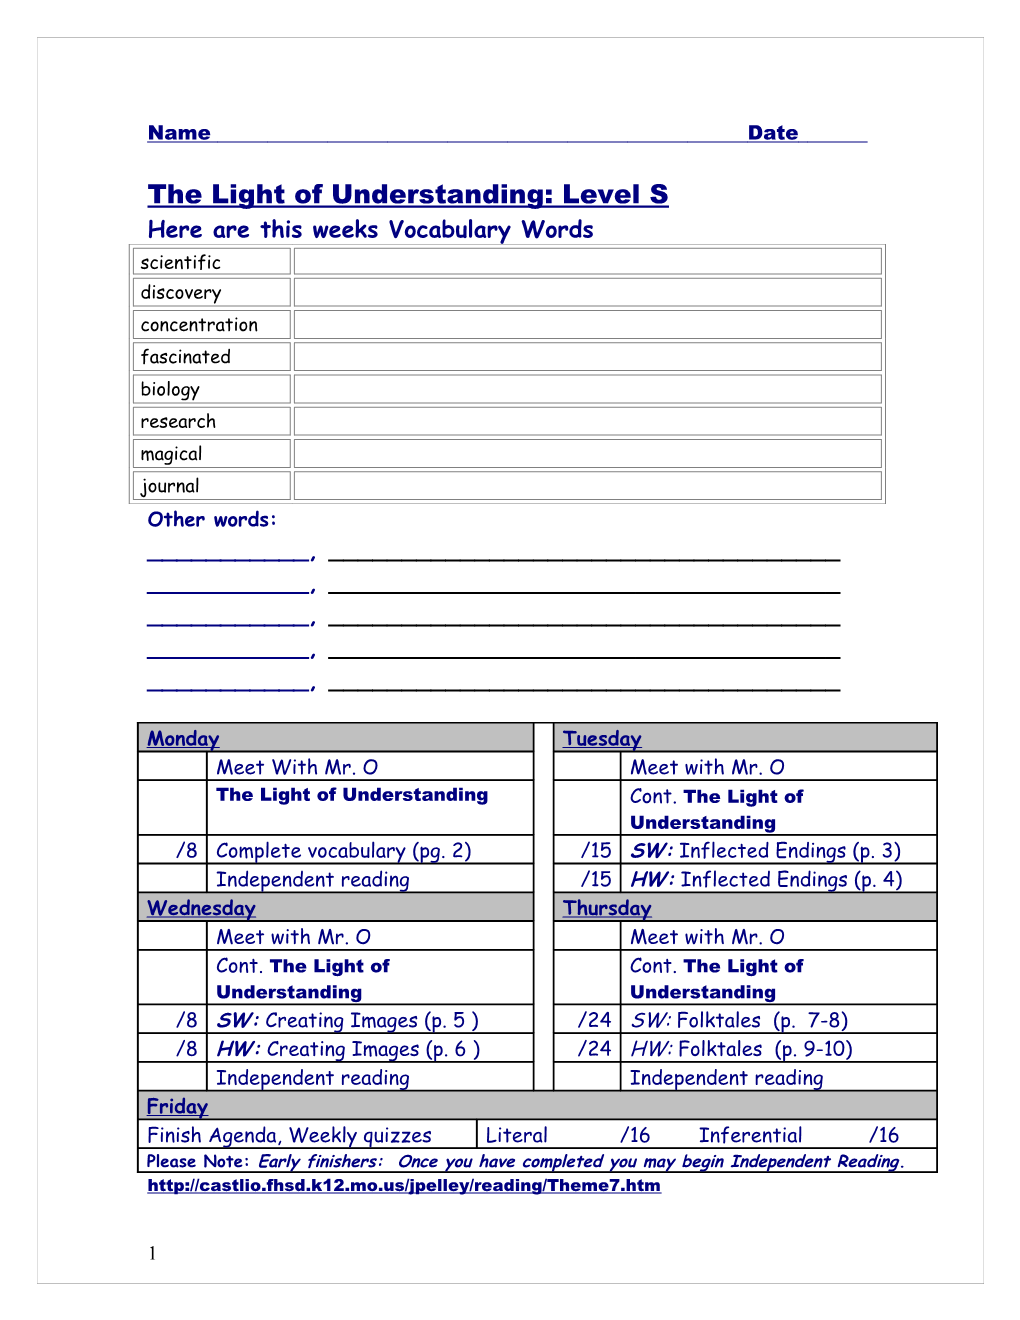 The Light of Understanding: Level S